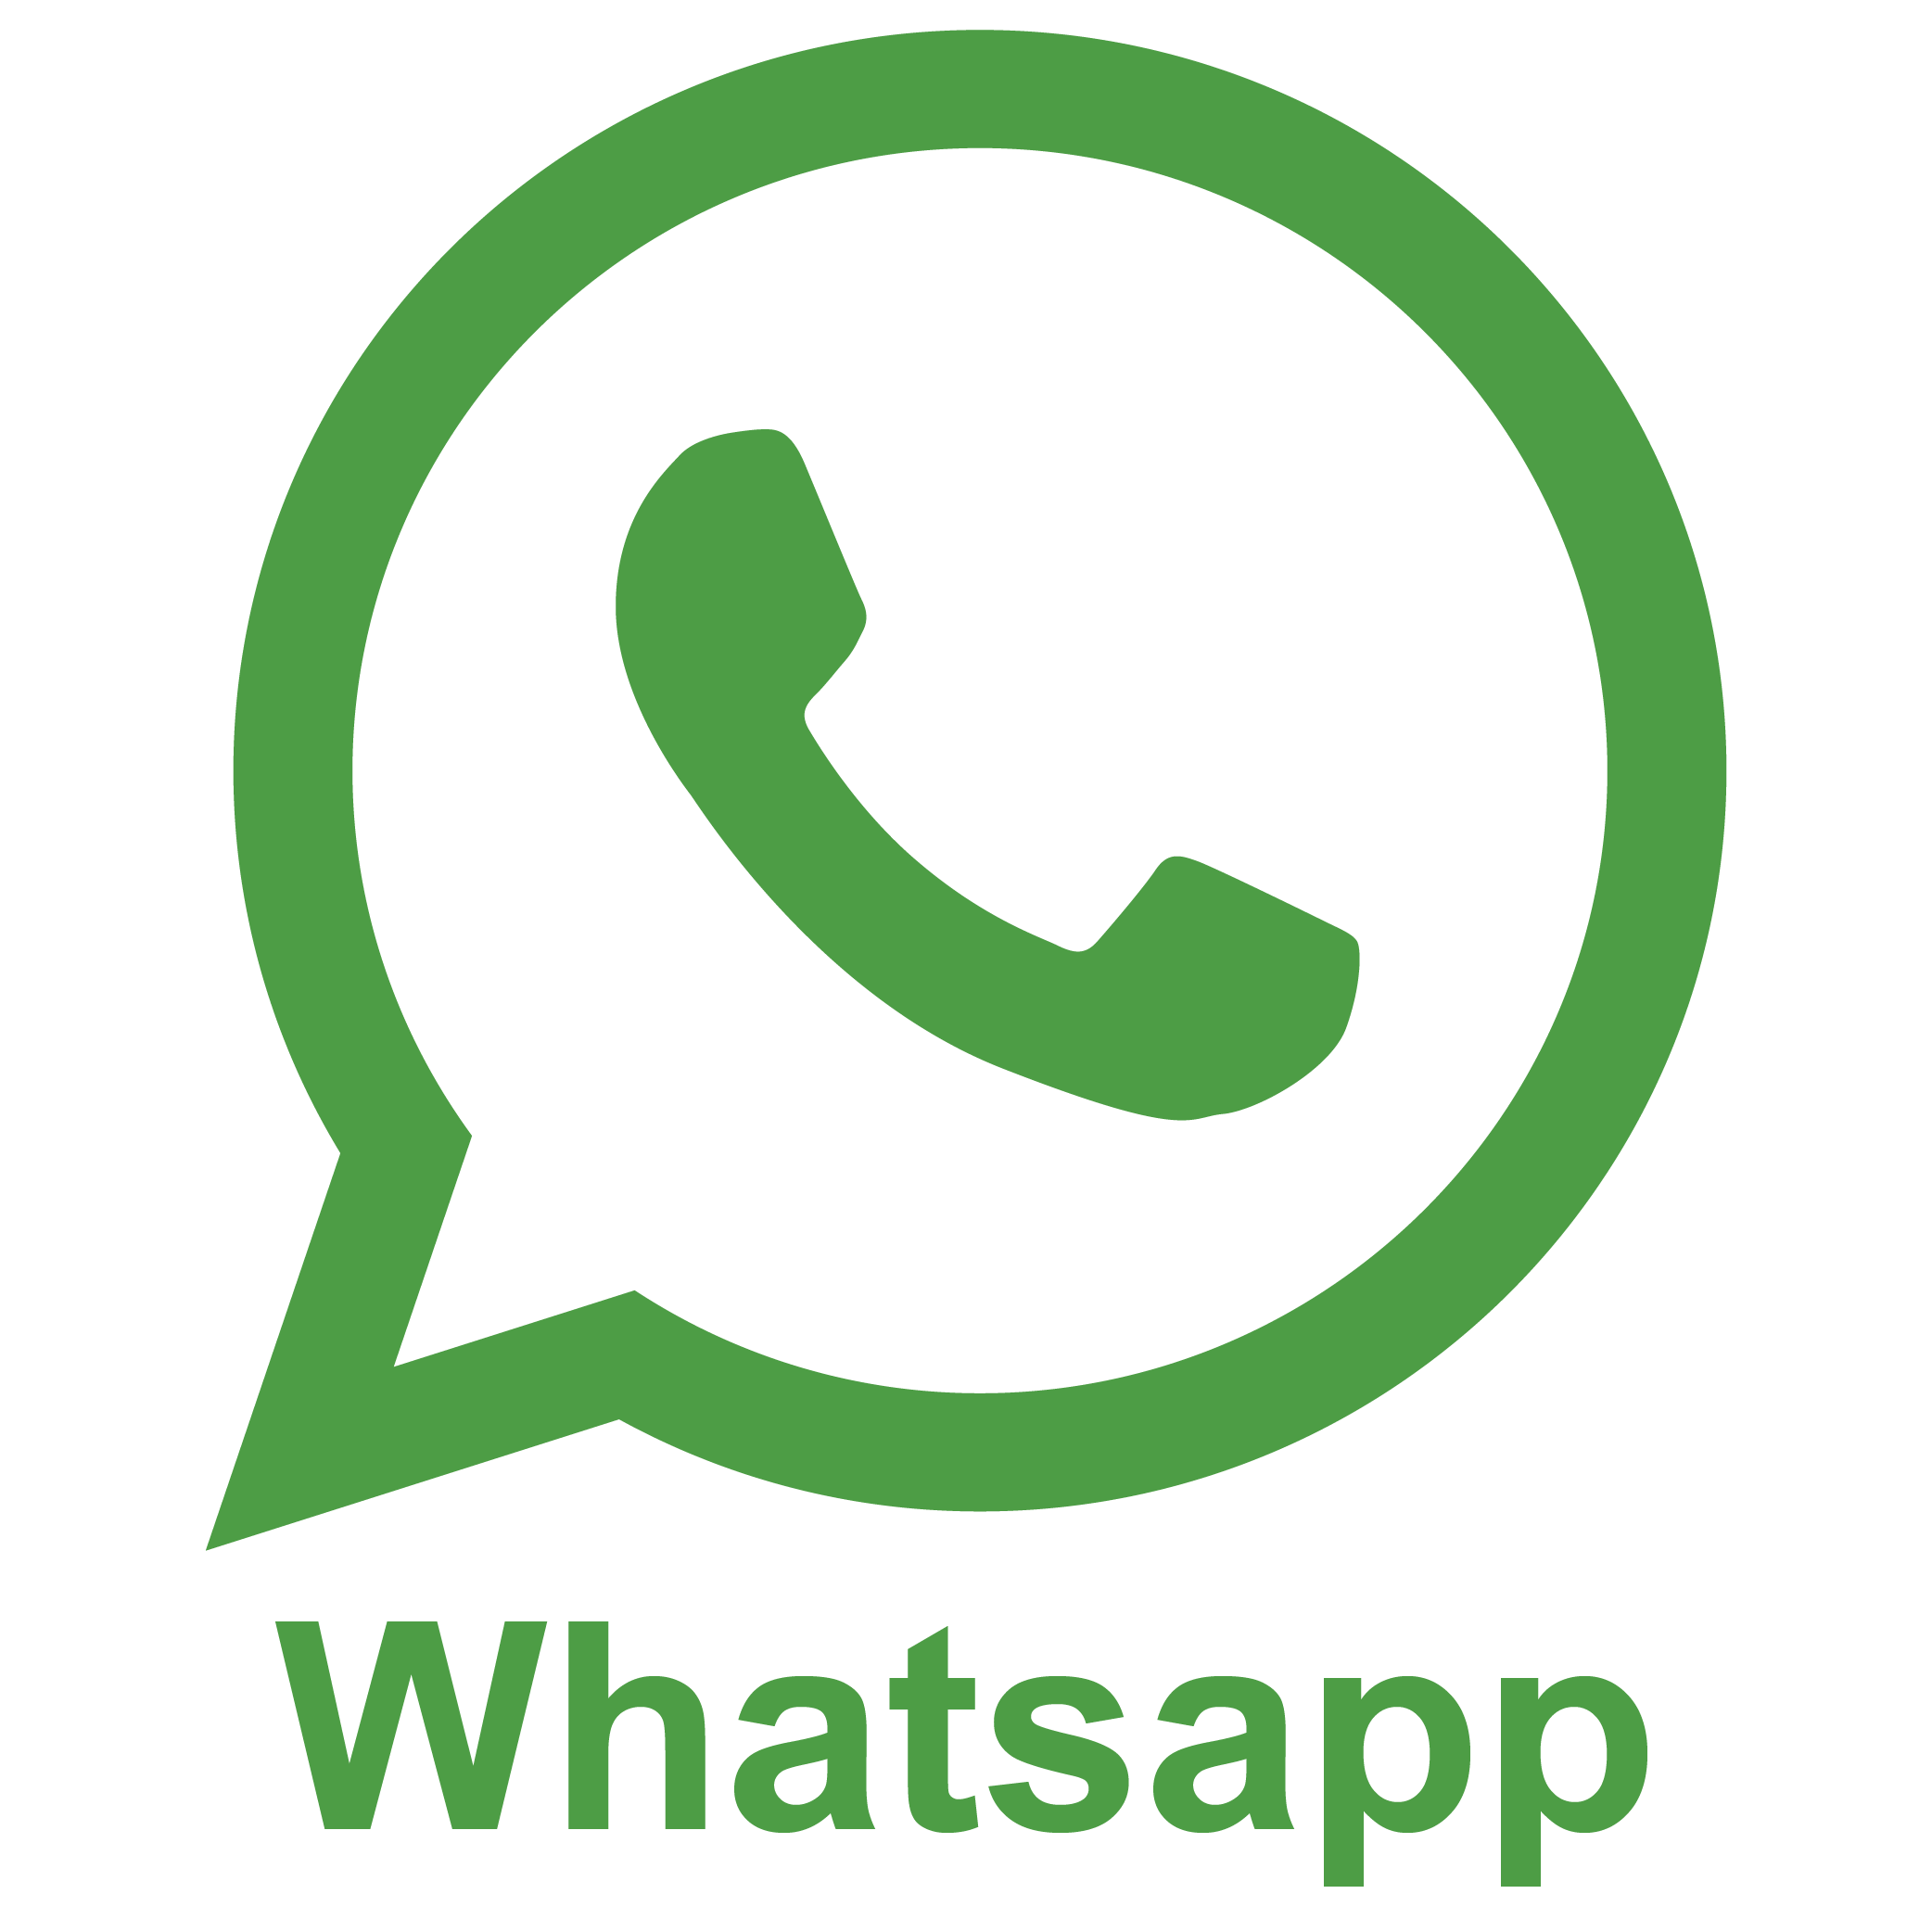 Vínculo para chat de whatsapp, abre una ventana emergente